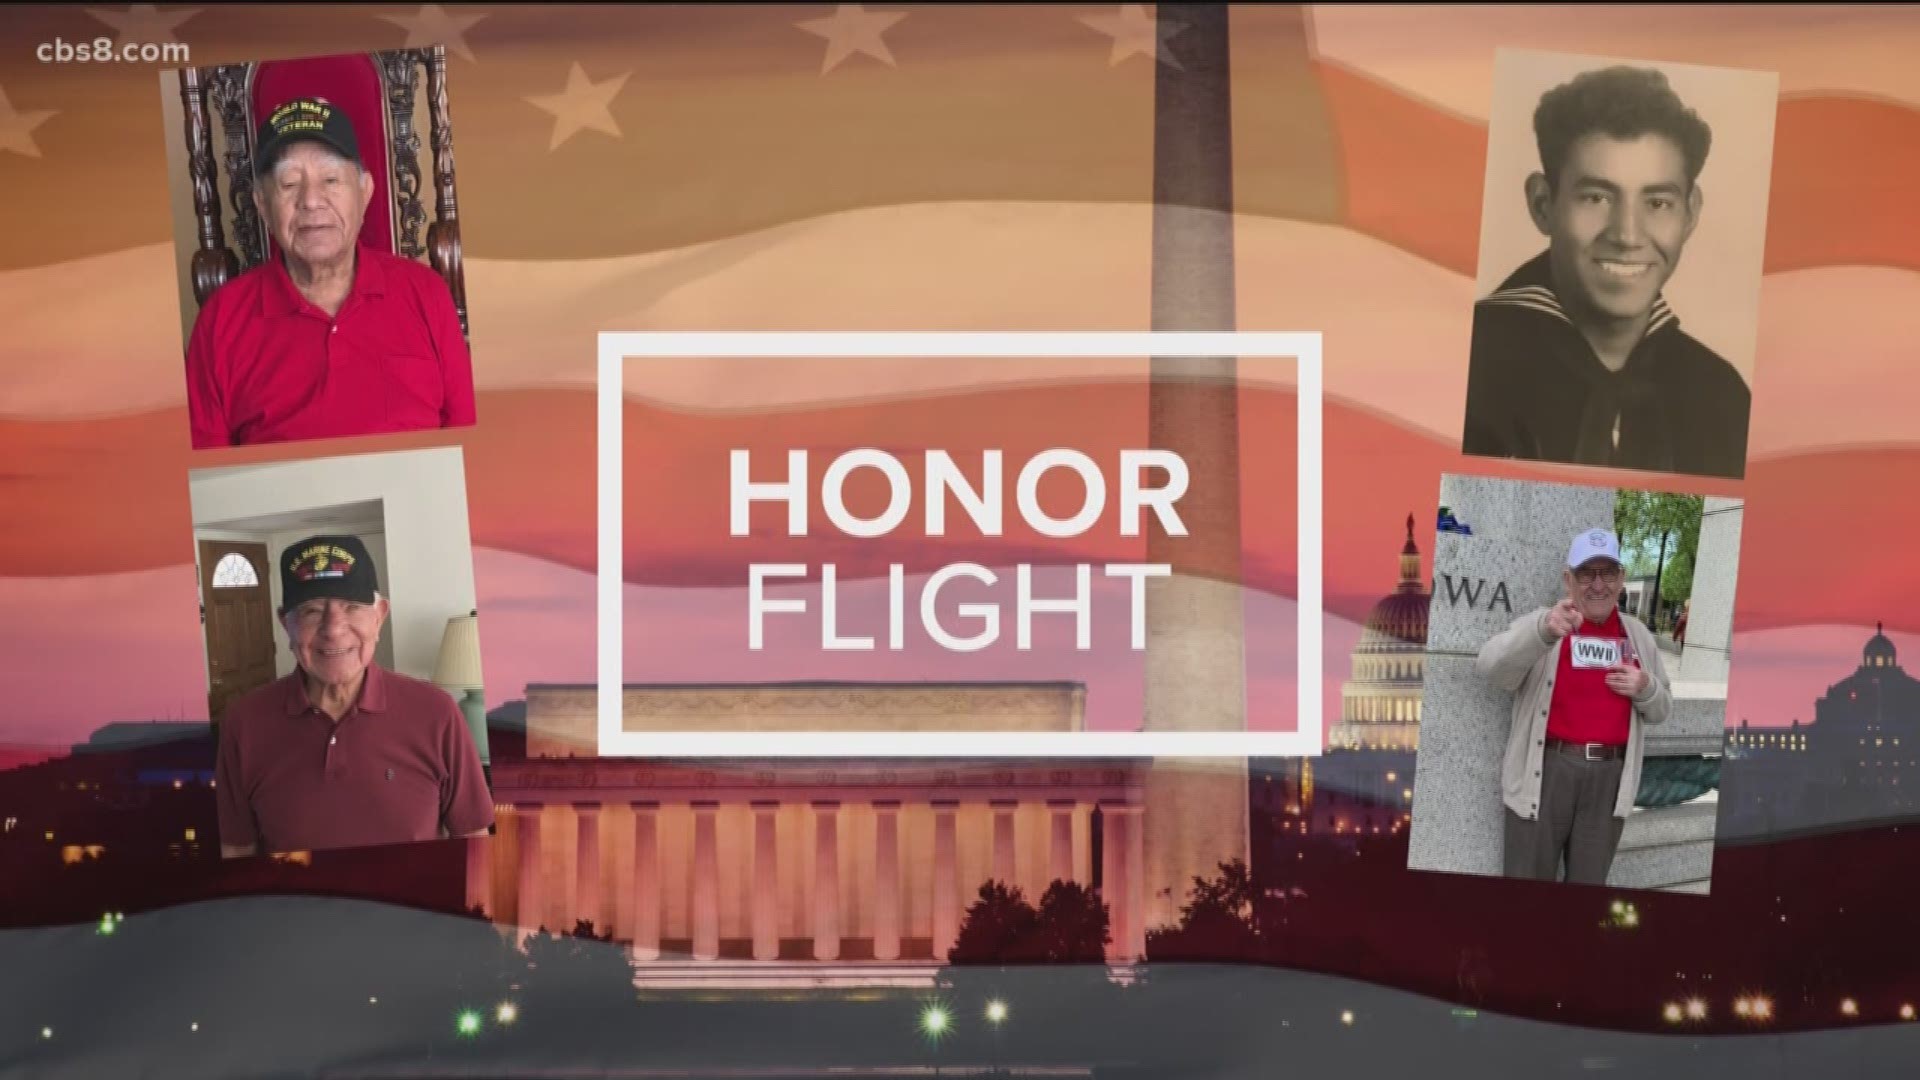 Honor Flight is a nonprofit that sends World War II veterans and now Korean War veterans to Washington, D.C. to visit their respective memorials.